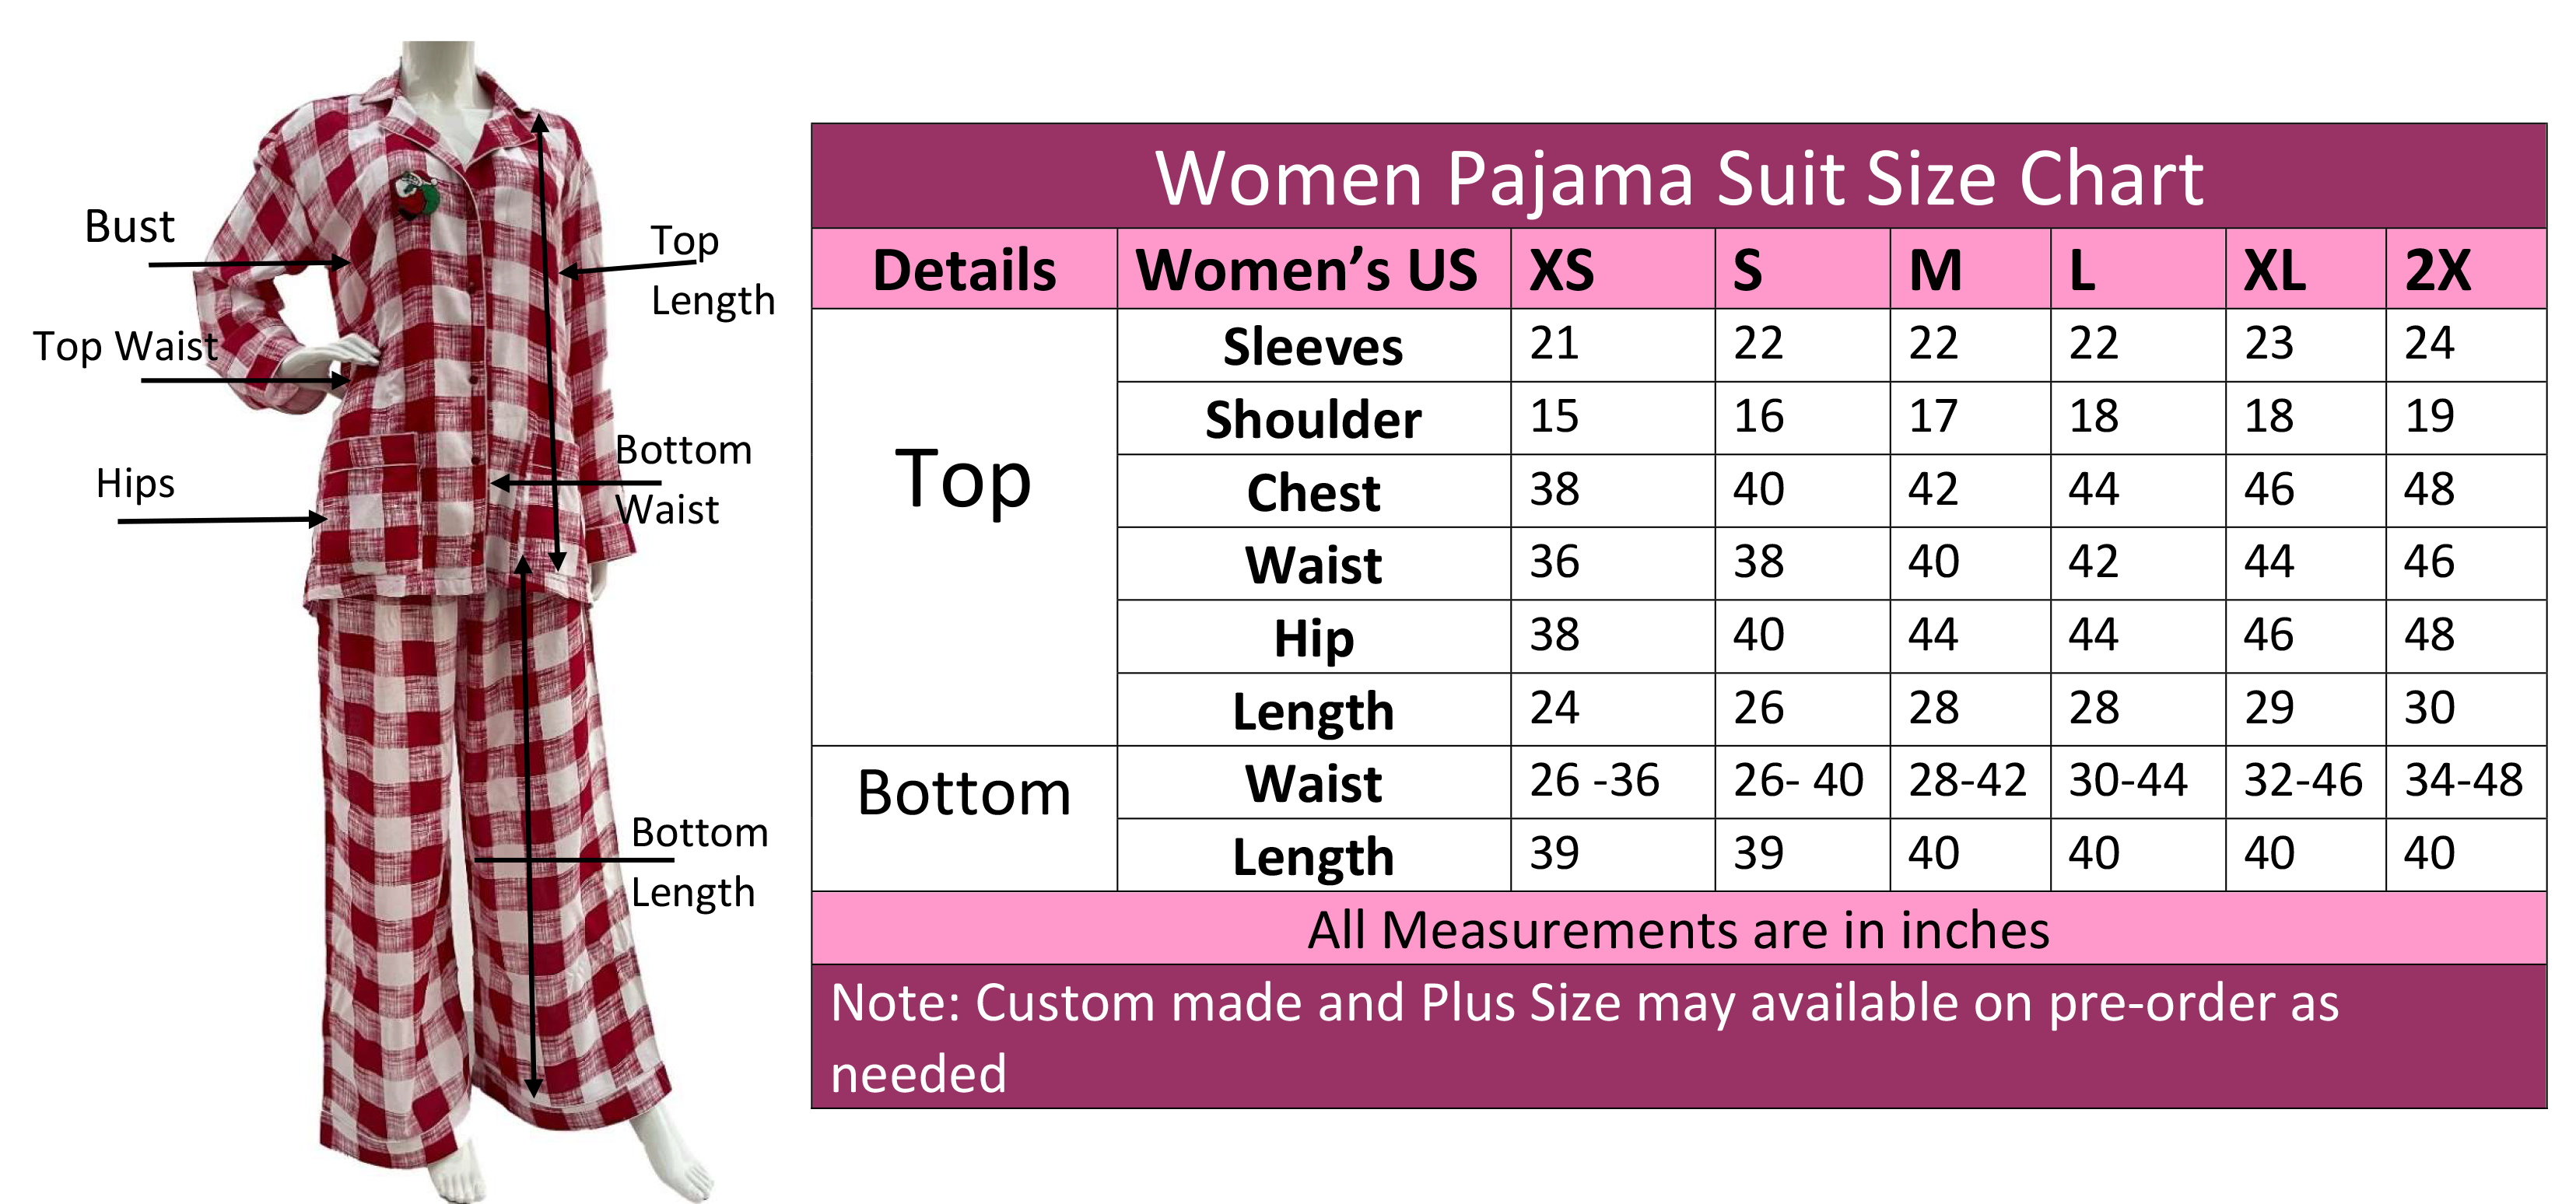 Pajama Size Chart for women